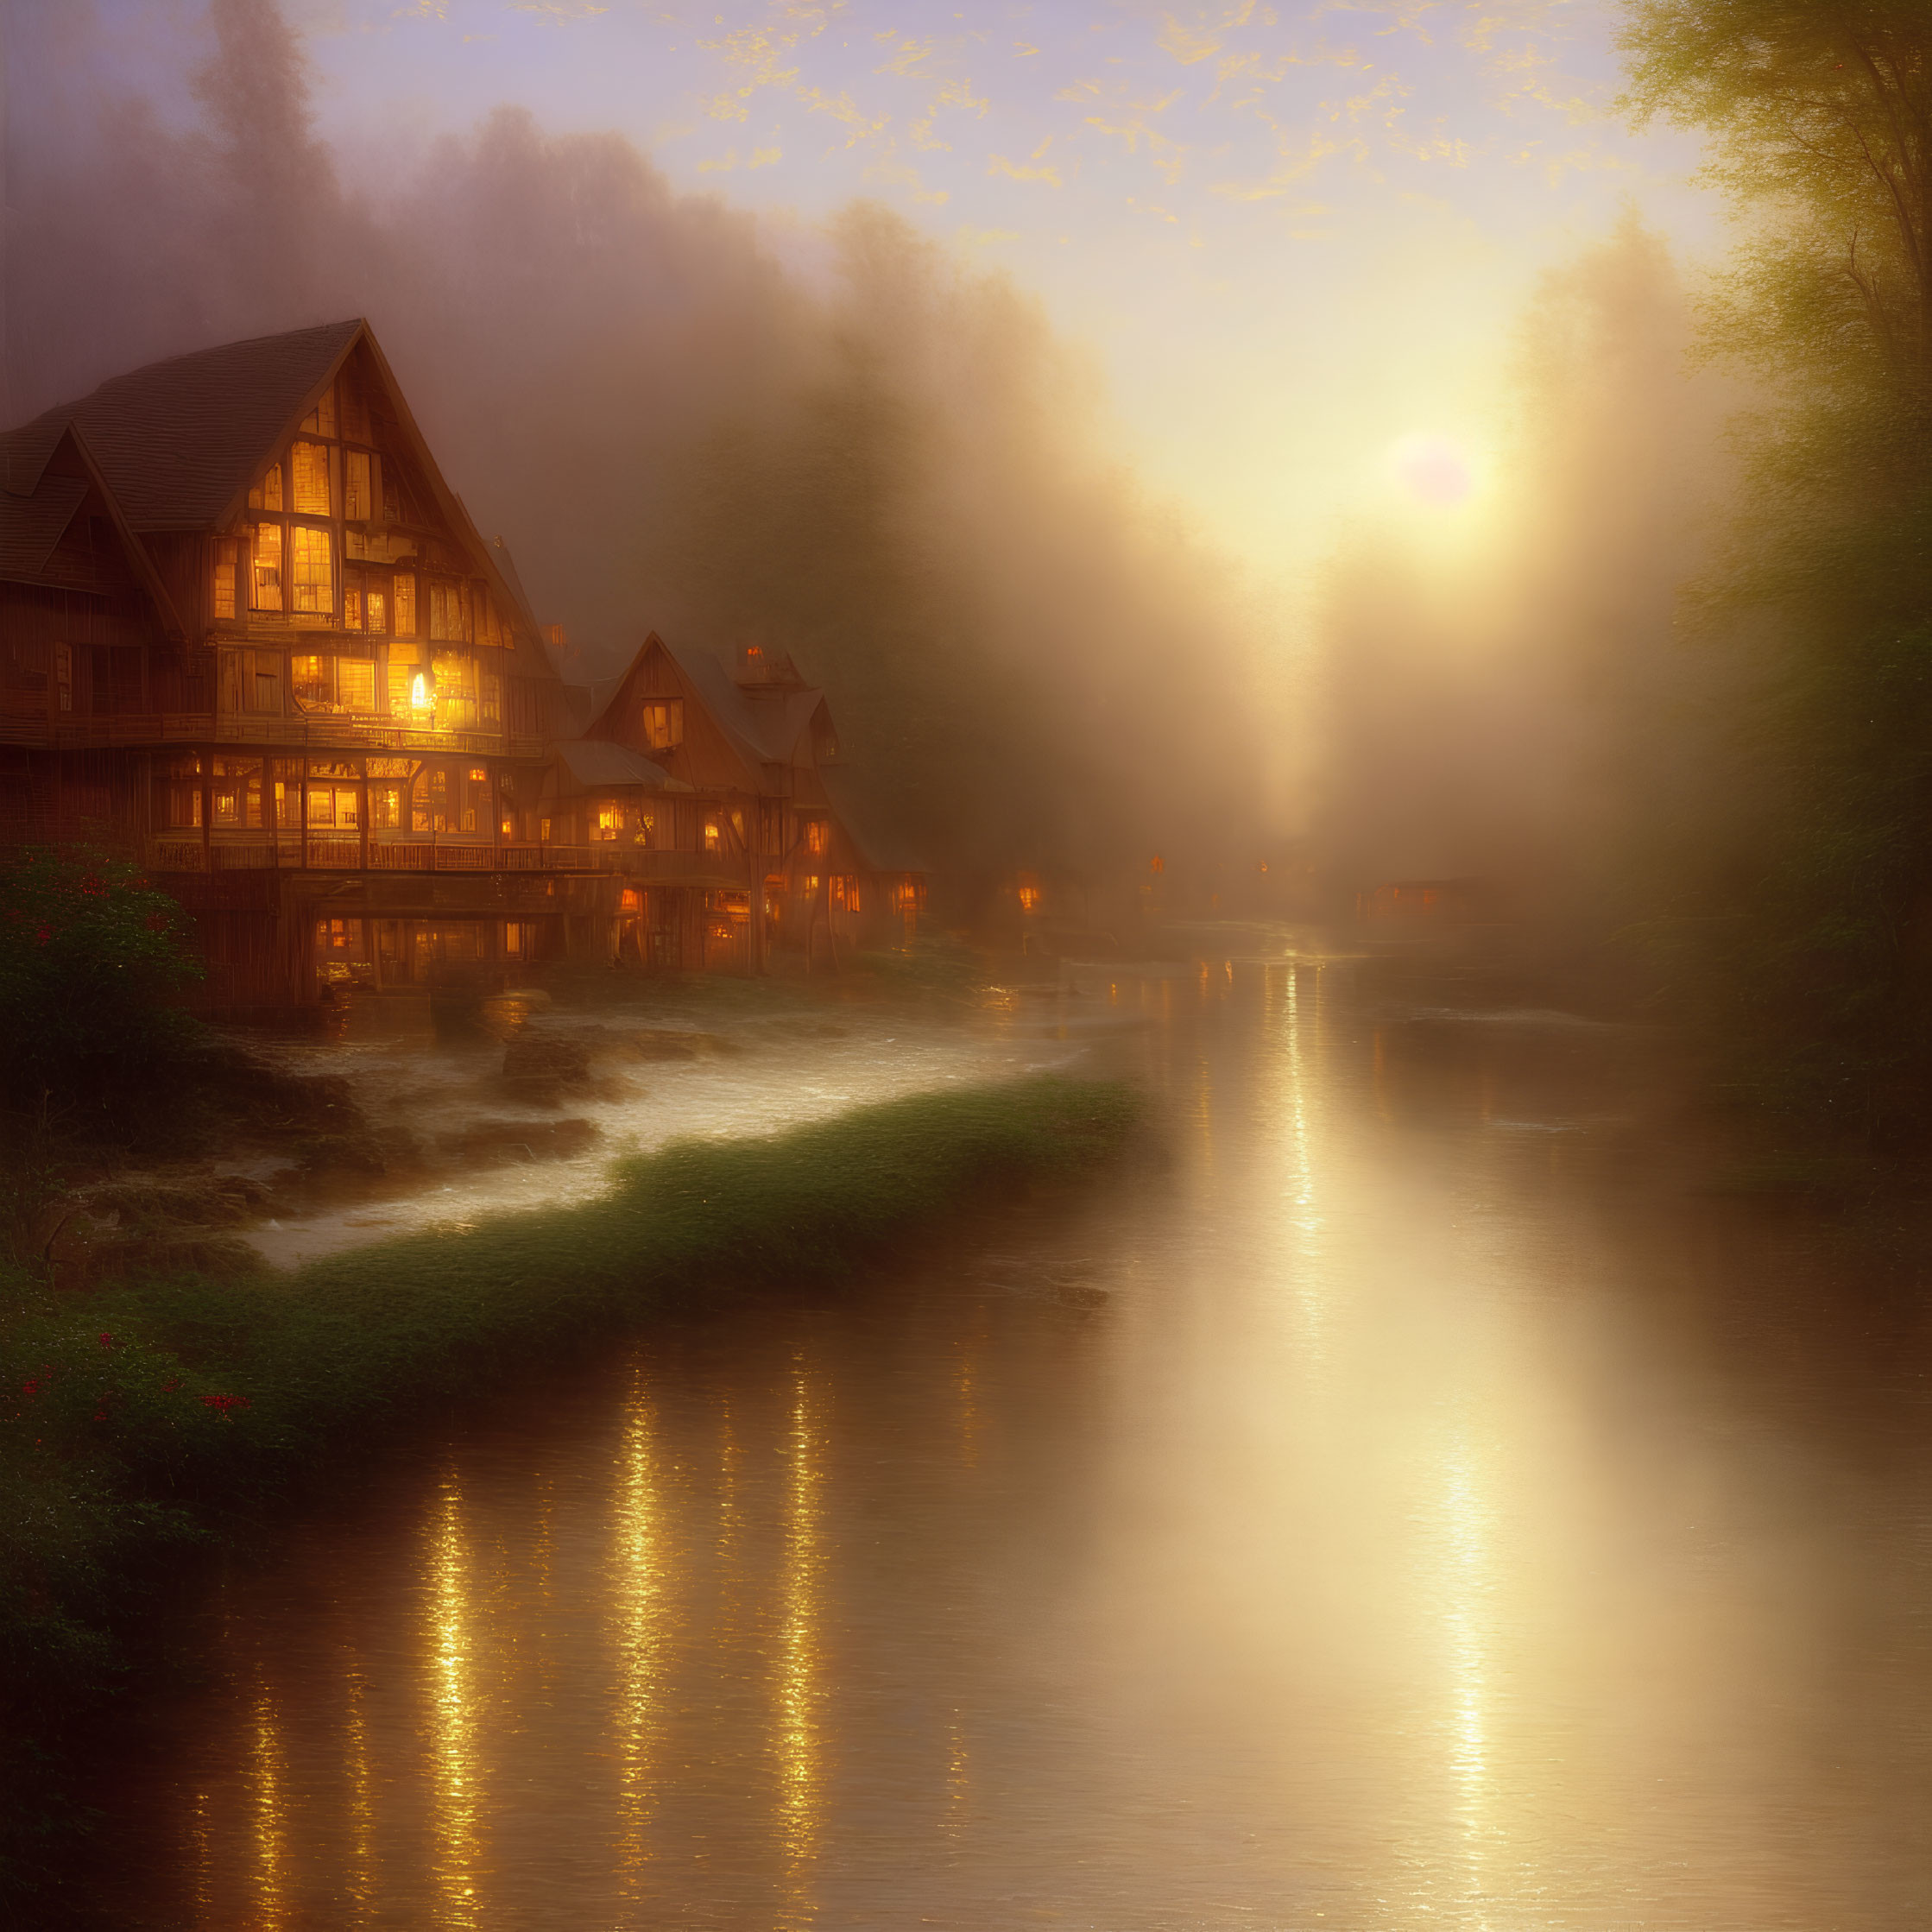 Riverside lodge at sunrise or sunset beside misty river